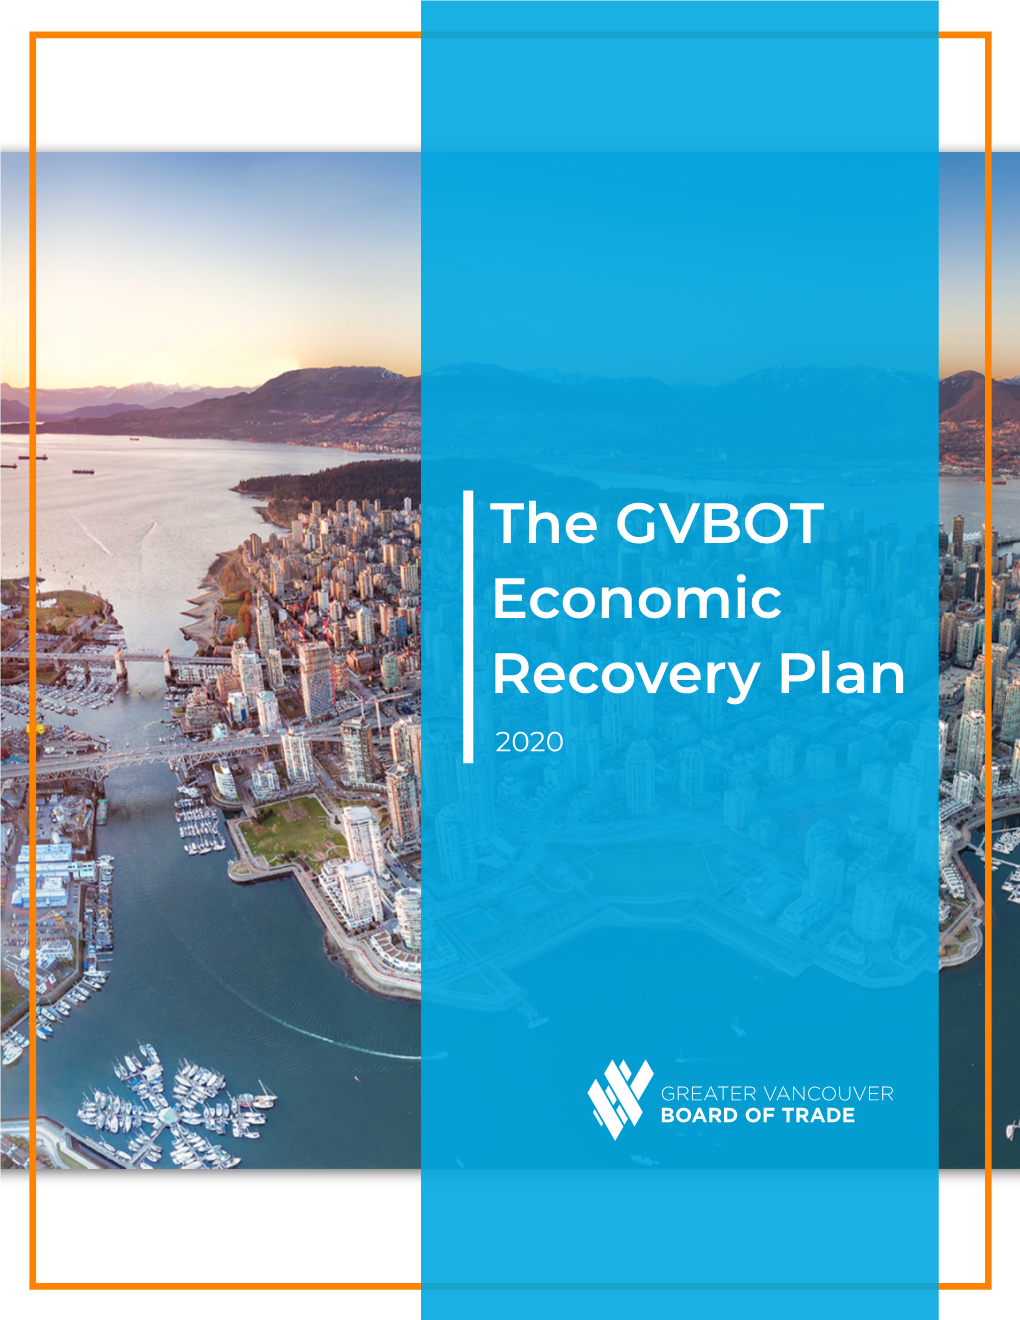 The GVBOT Economic Recovery Plan 2020